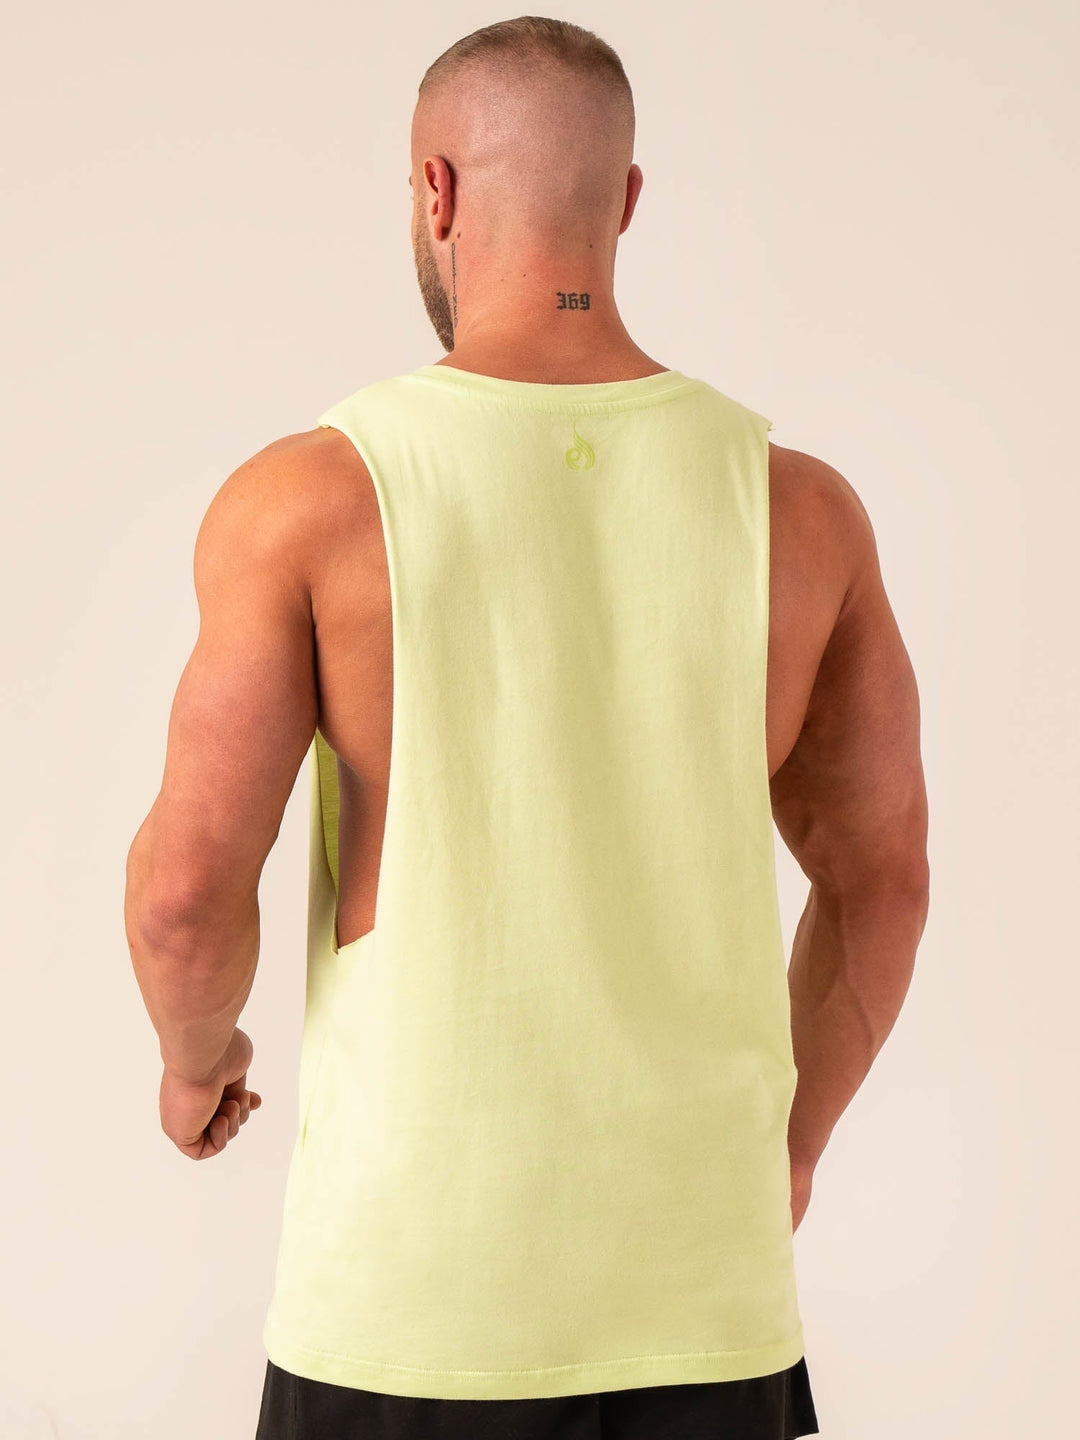 Baller Tank - Lime Clothing Ryderwear 